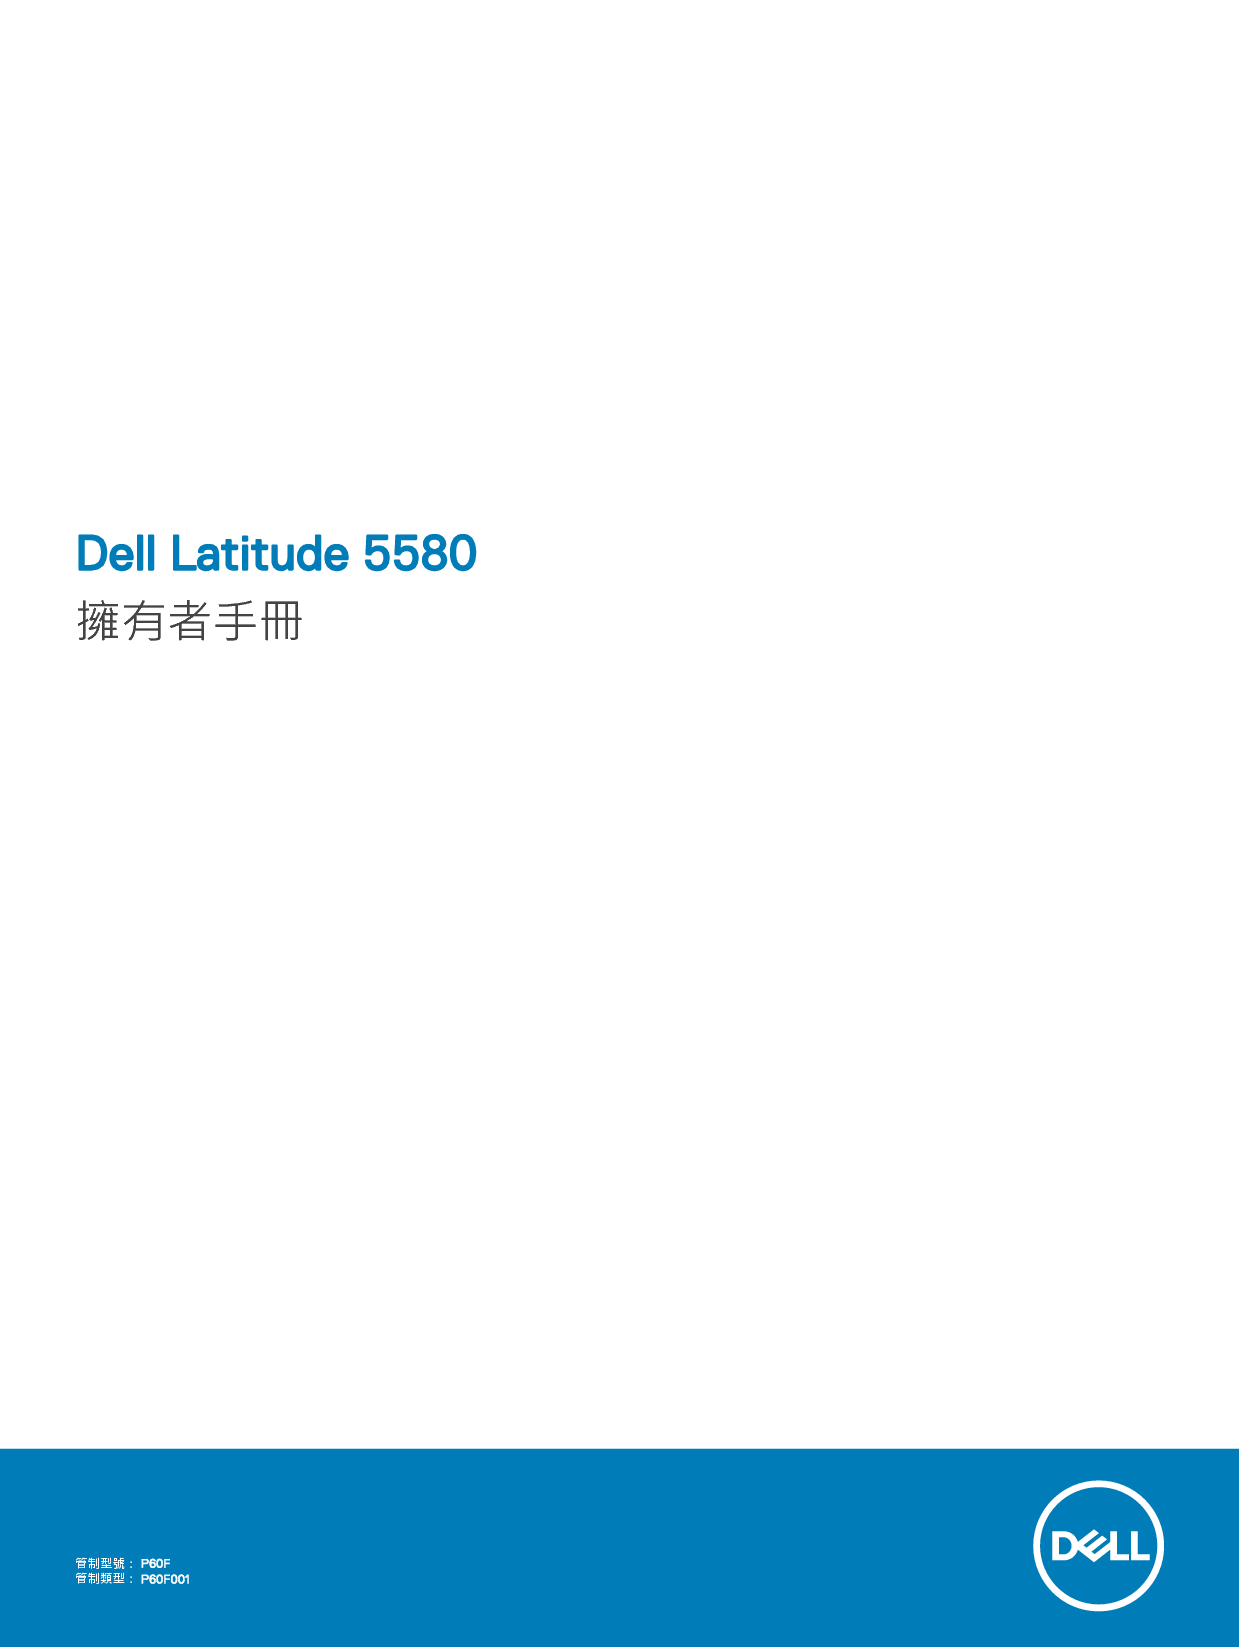 戴尔 Dell Latitude 5580 繁体 用户手册 封面